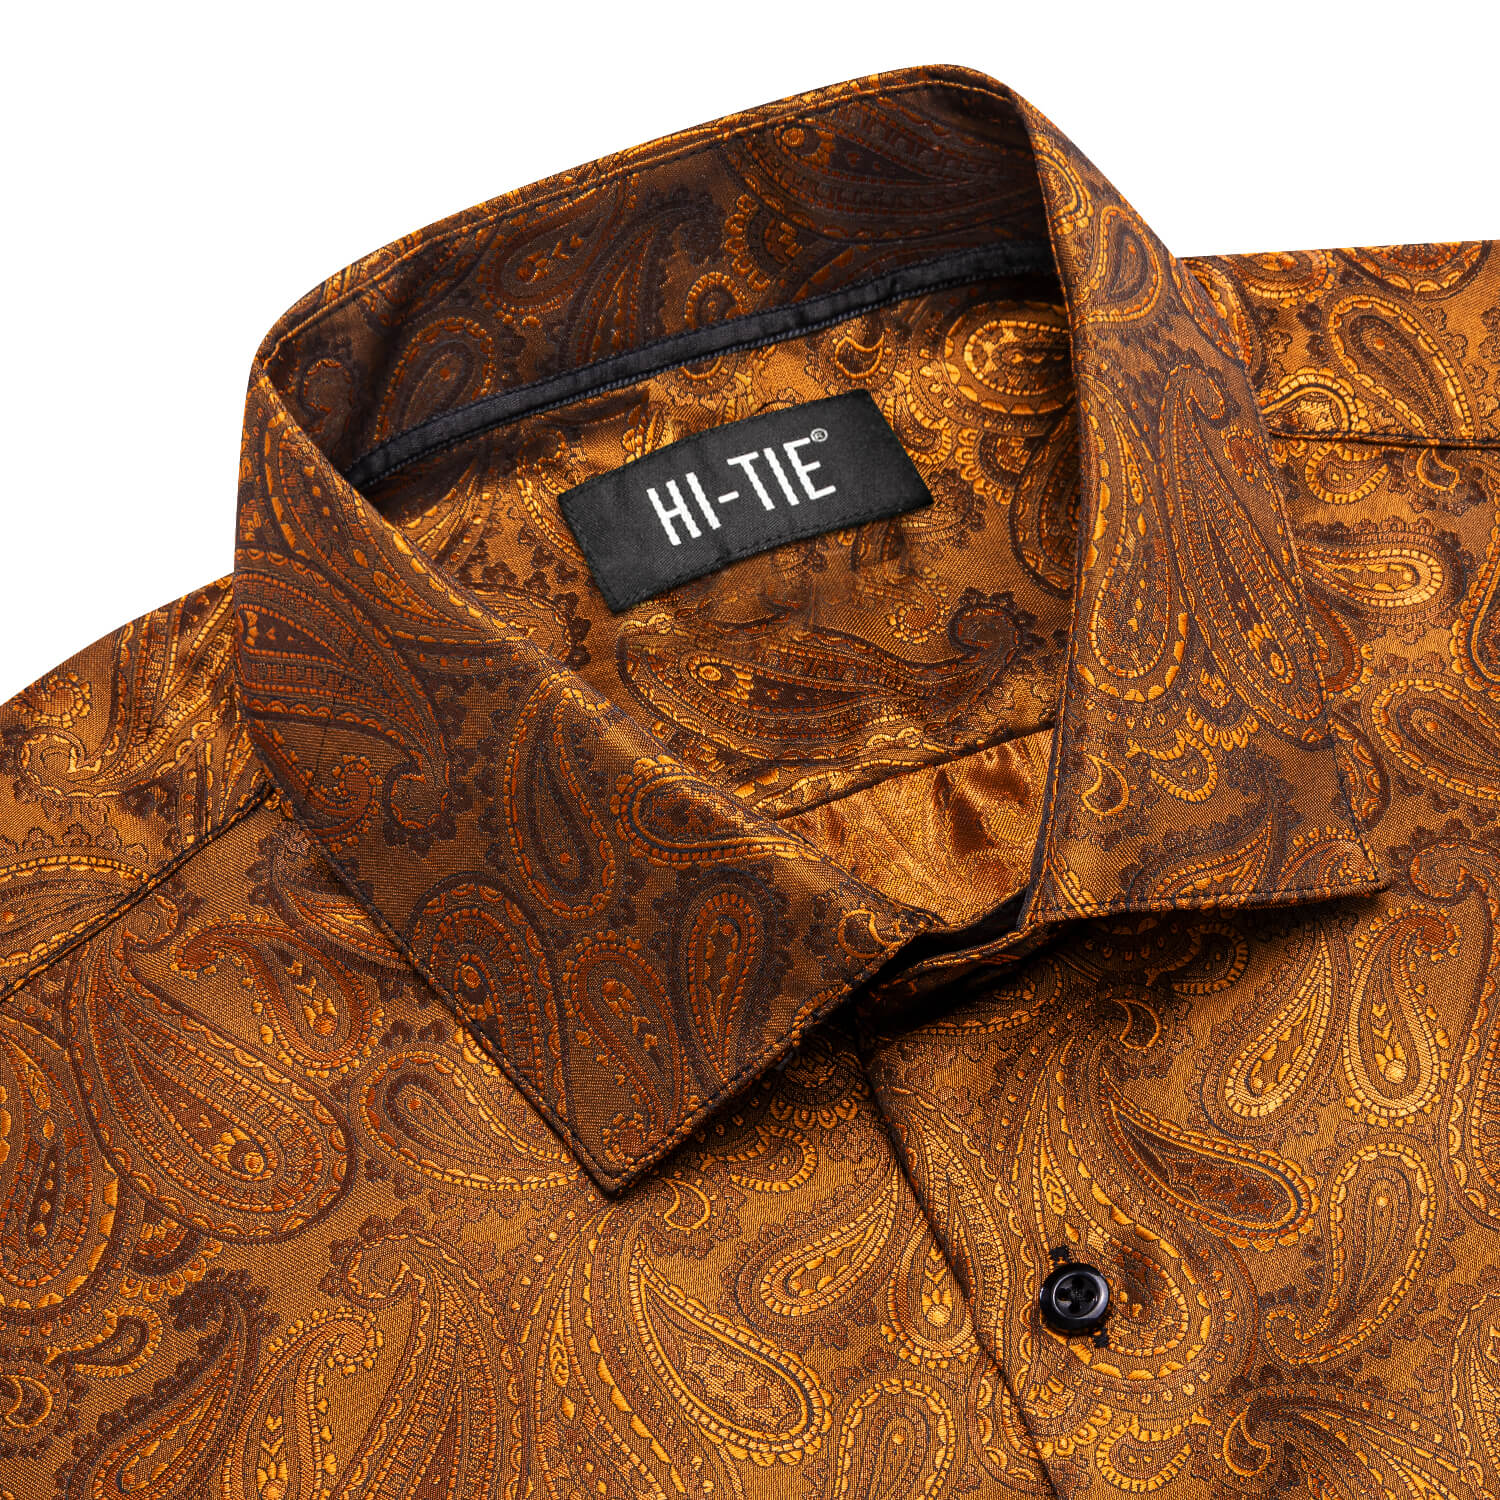 Hi-Tie Men's Shirt Button Down Bronze Brown Paisley Silk Shirt Top Hot